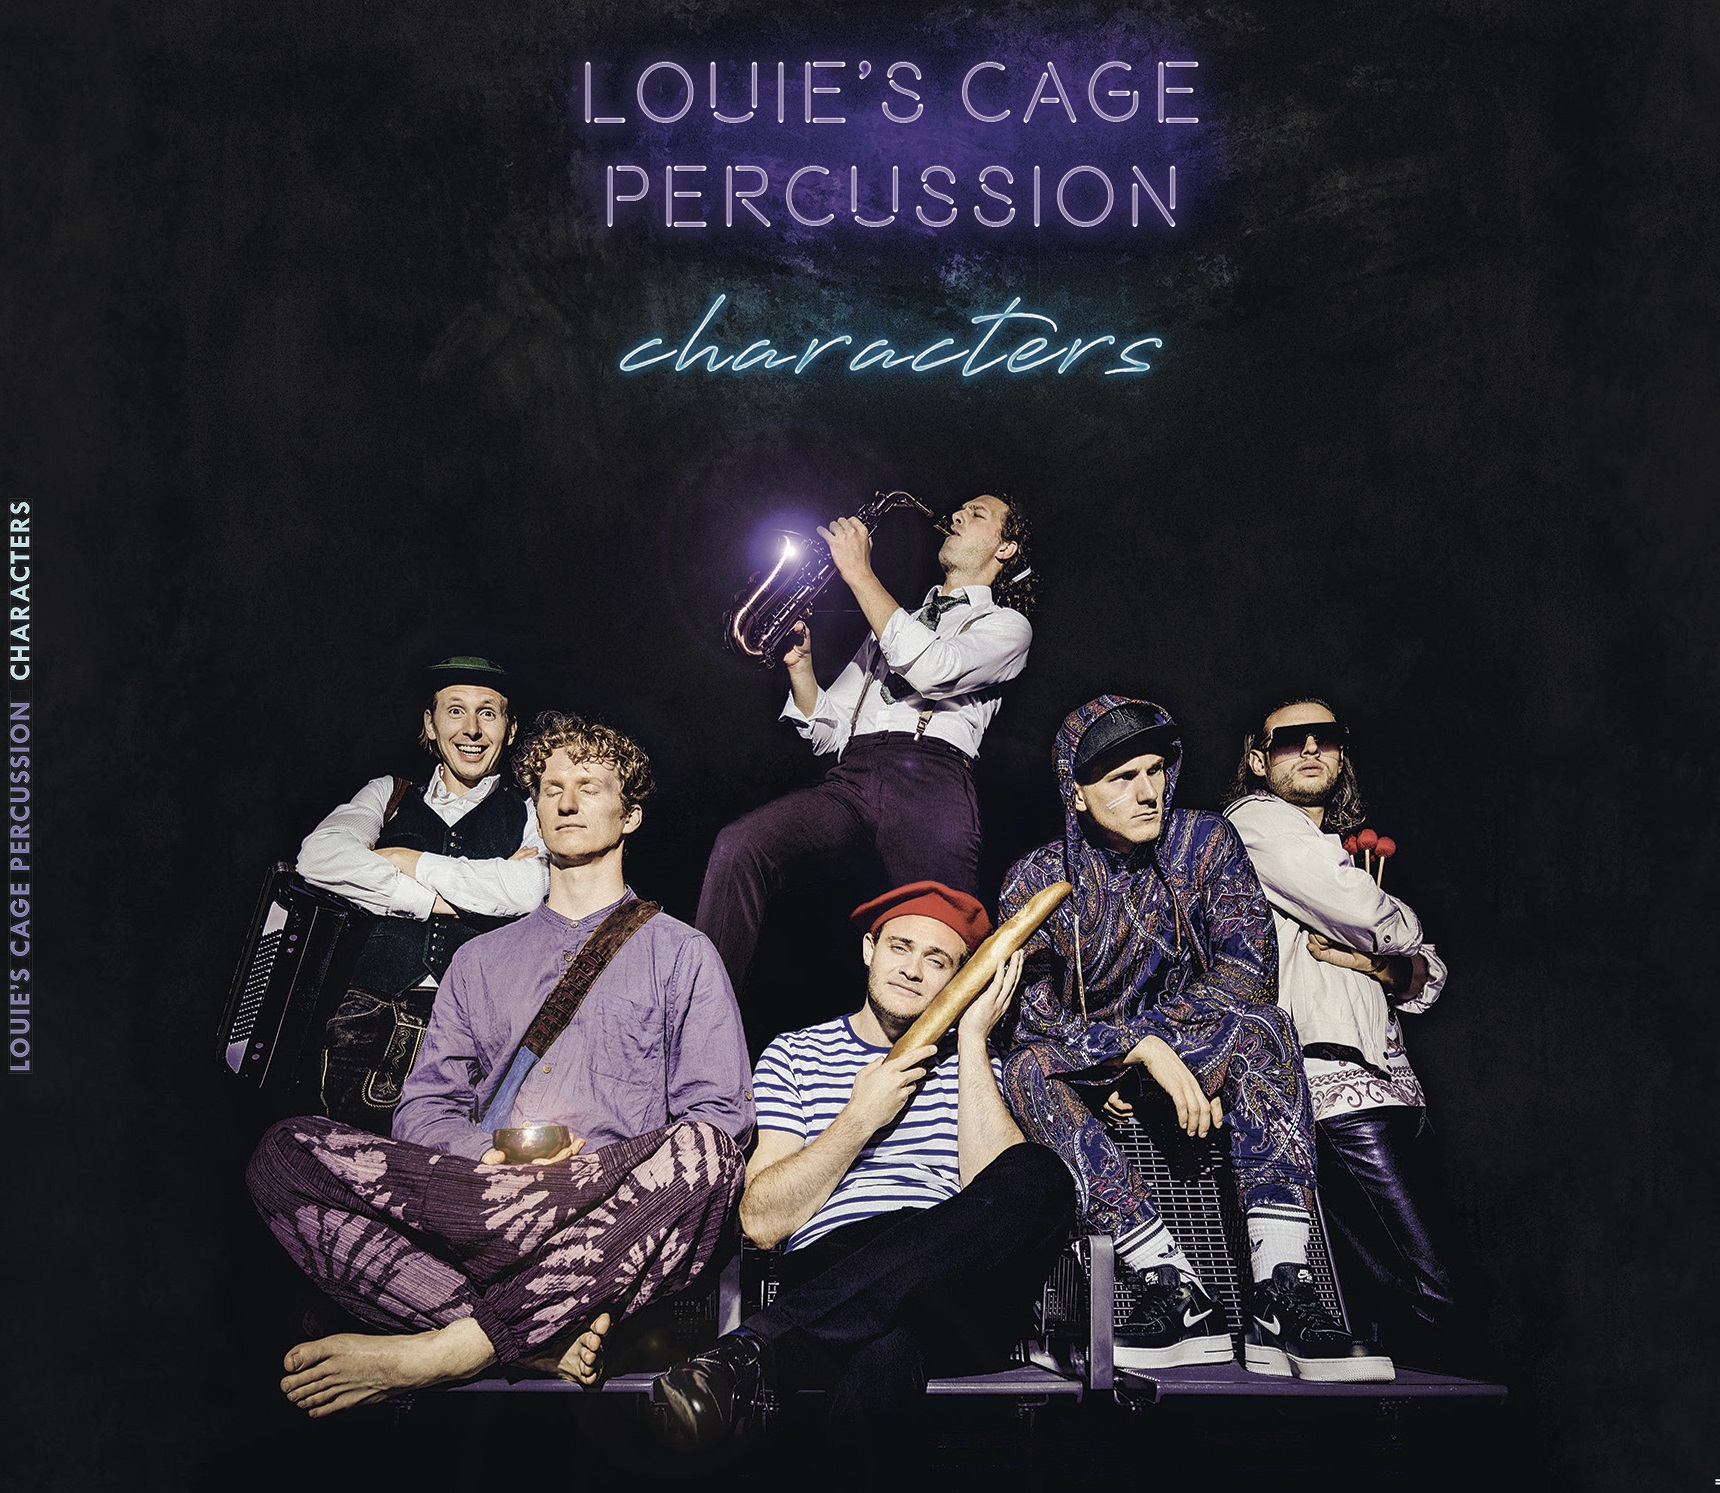 Boomtastic! Louie’s Cage Percussion